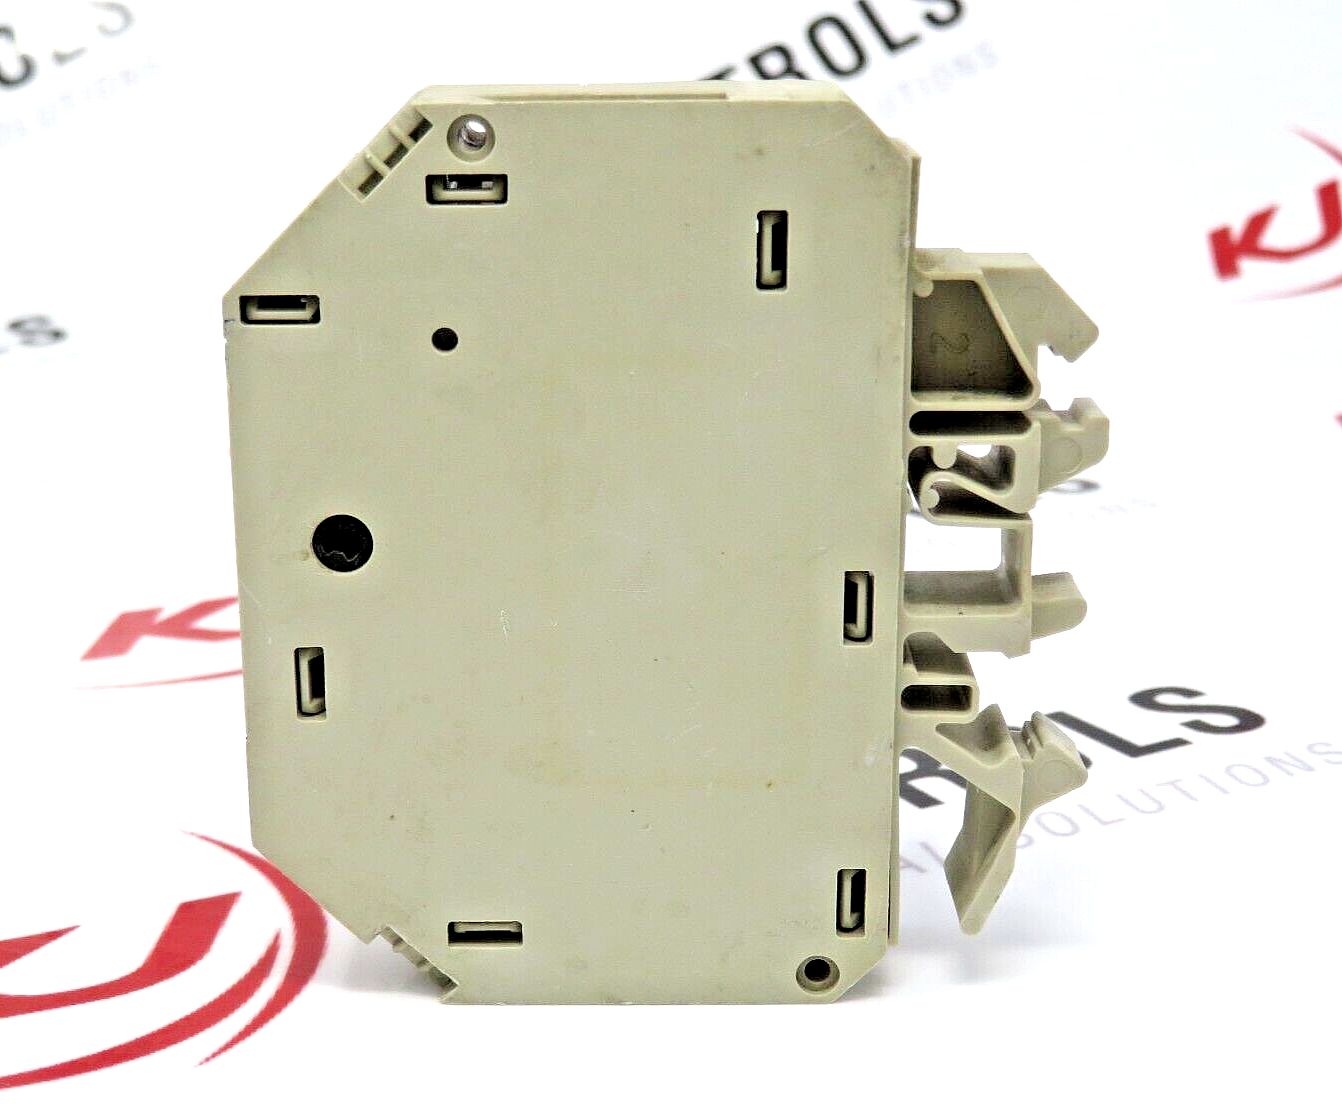 Schneider Electric Telemecanique GB2-CB07 Circuit Breaker 2A 1-Pole